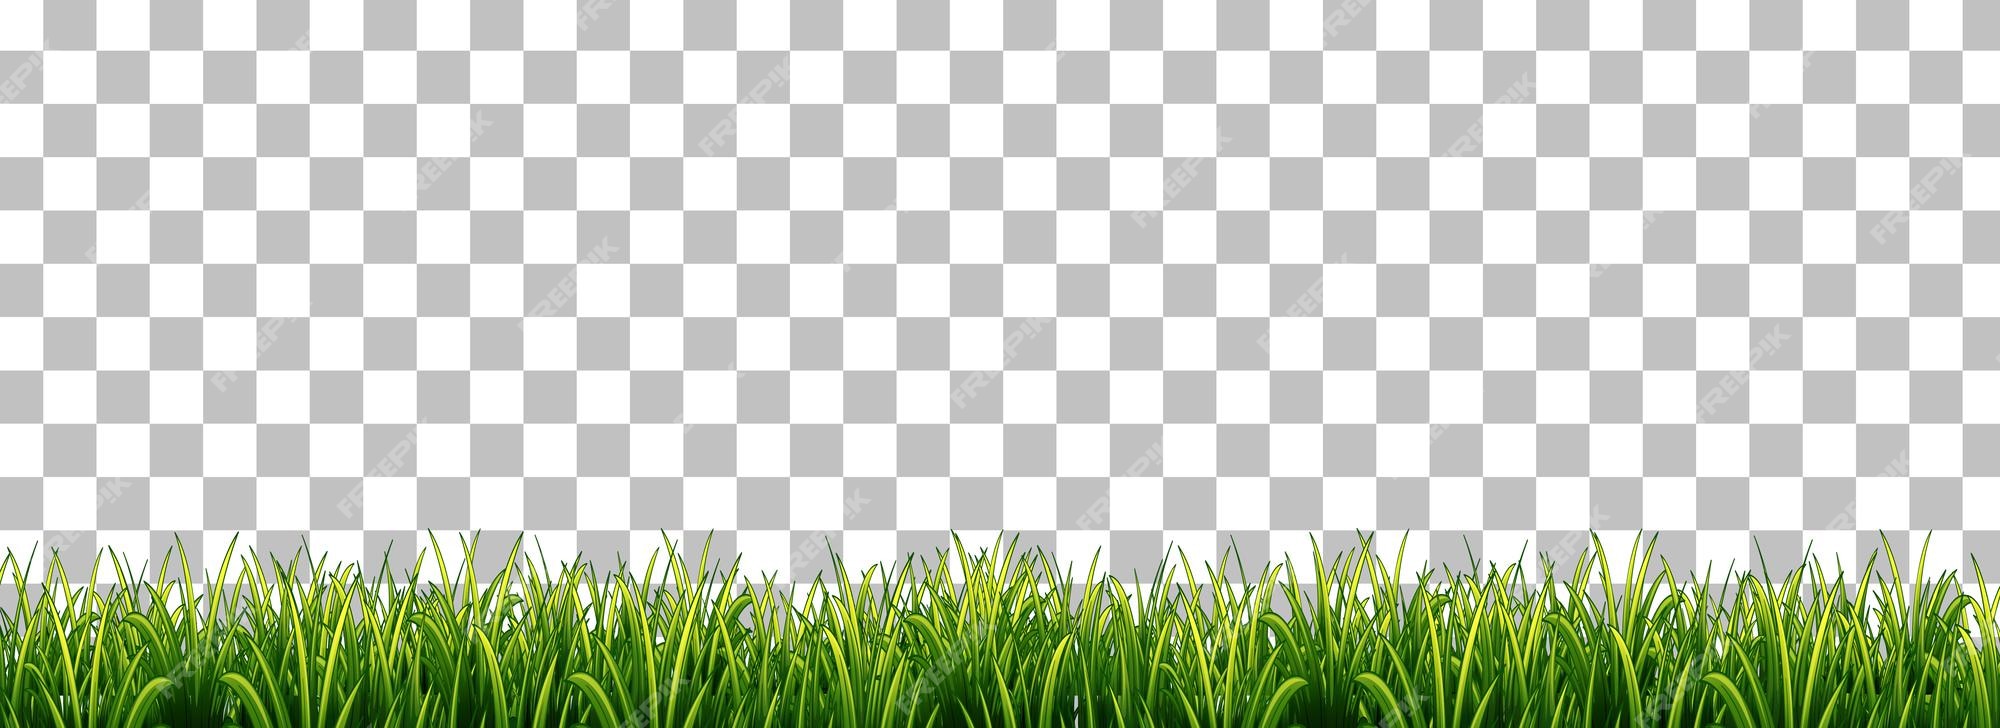 Grass png Vectors & Illustrations for Free Download | Freepik